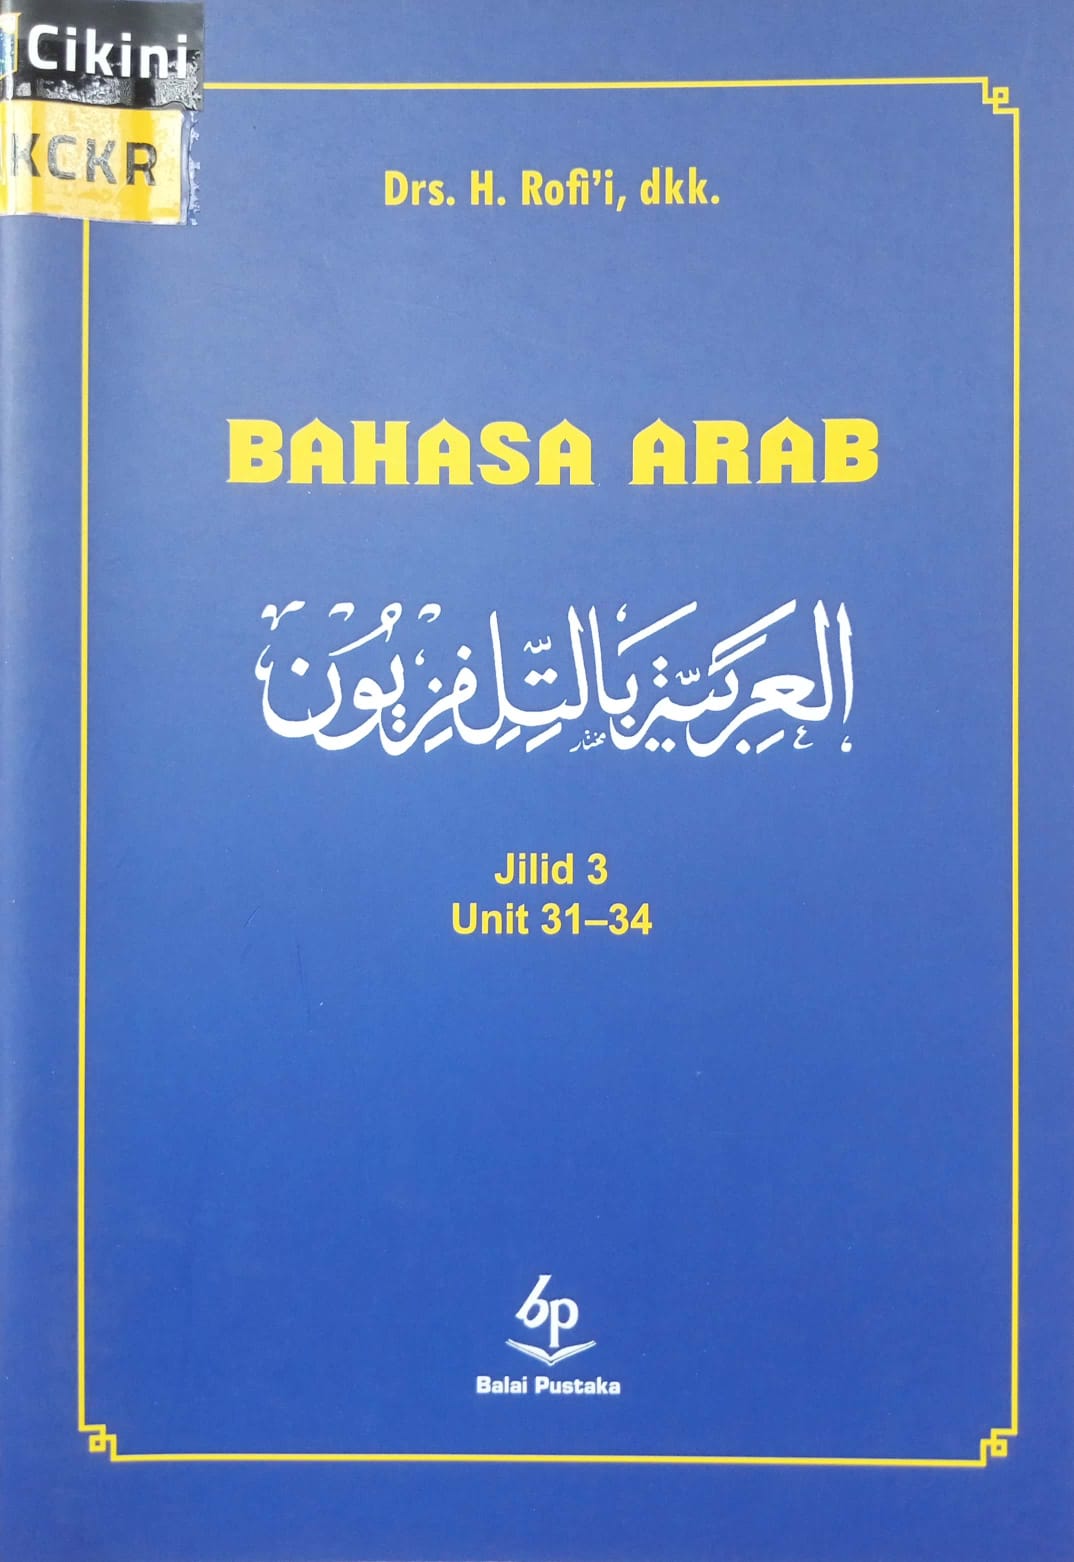 Bahasa Arab jilid 3 unit 31-34